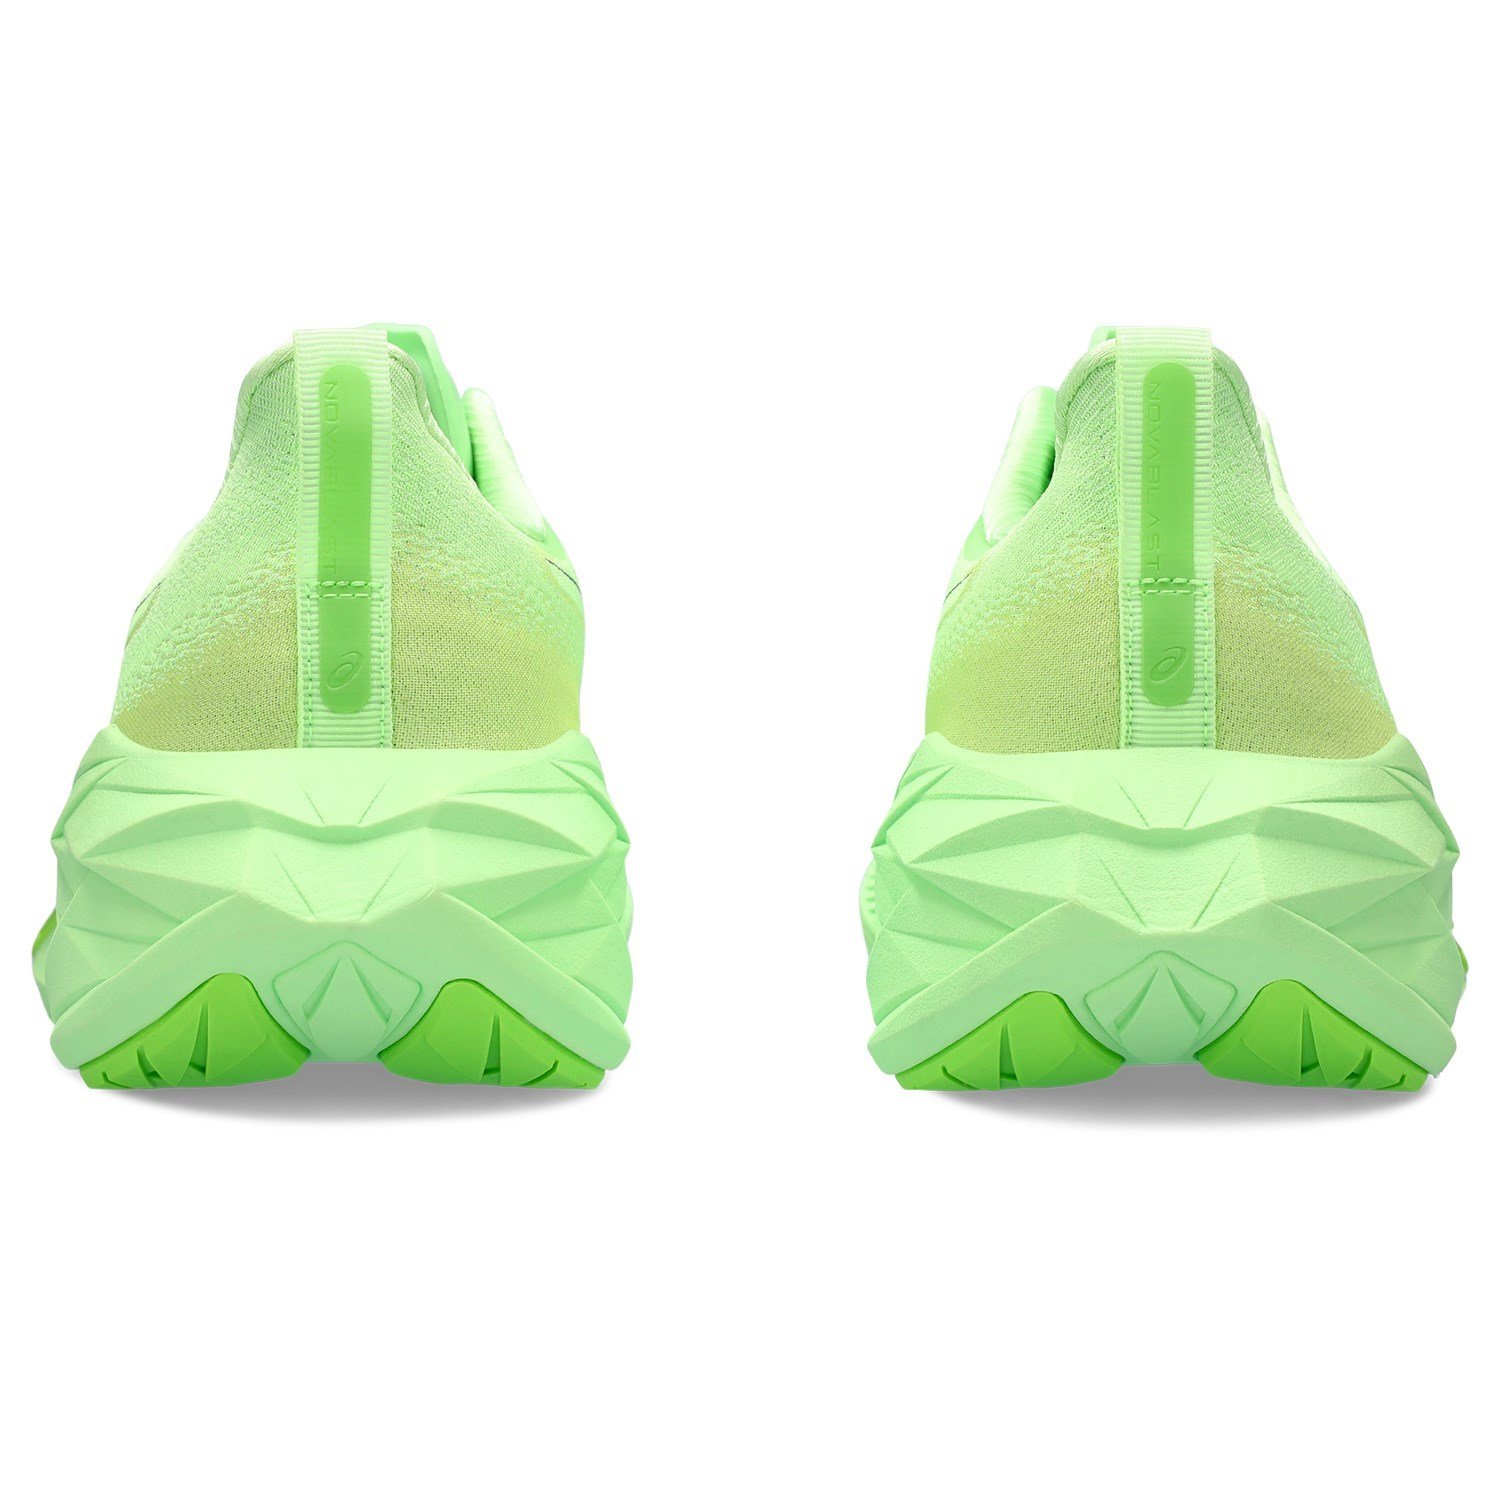 Asics NovaBlast 4 - Mens Running Shoes - Illuminate Green/Lime Burst ...